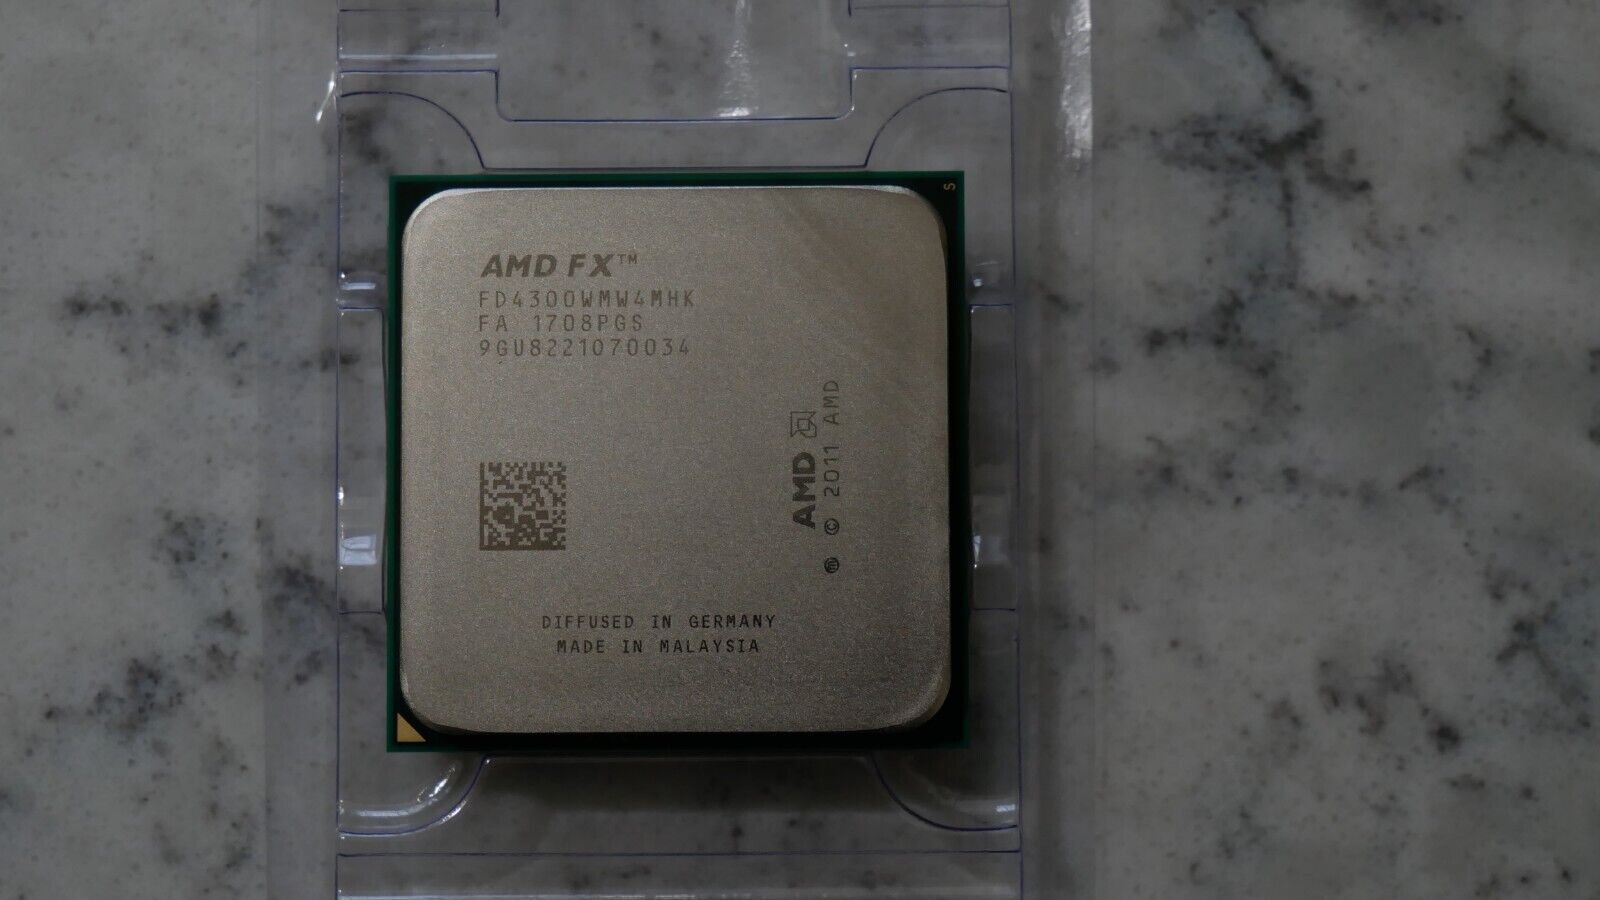 AMD FX-4300 | 3.8 GHz Quad-Core AM3+ Processor CPU | FD4300WMW4MHK